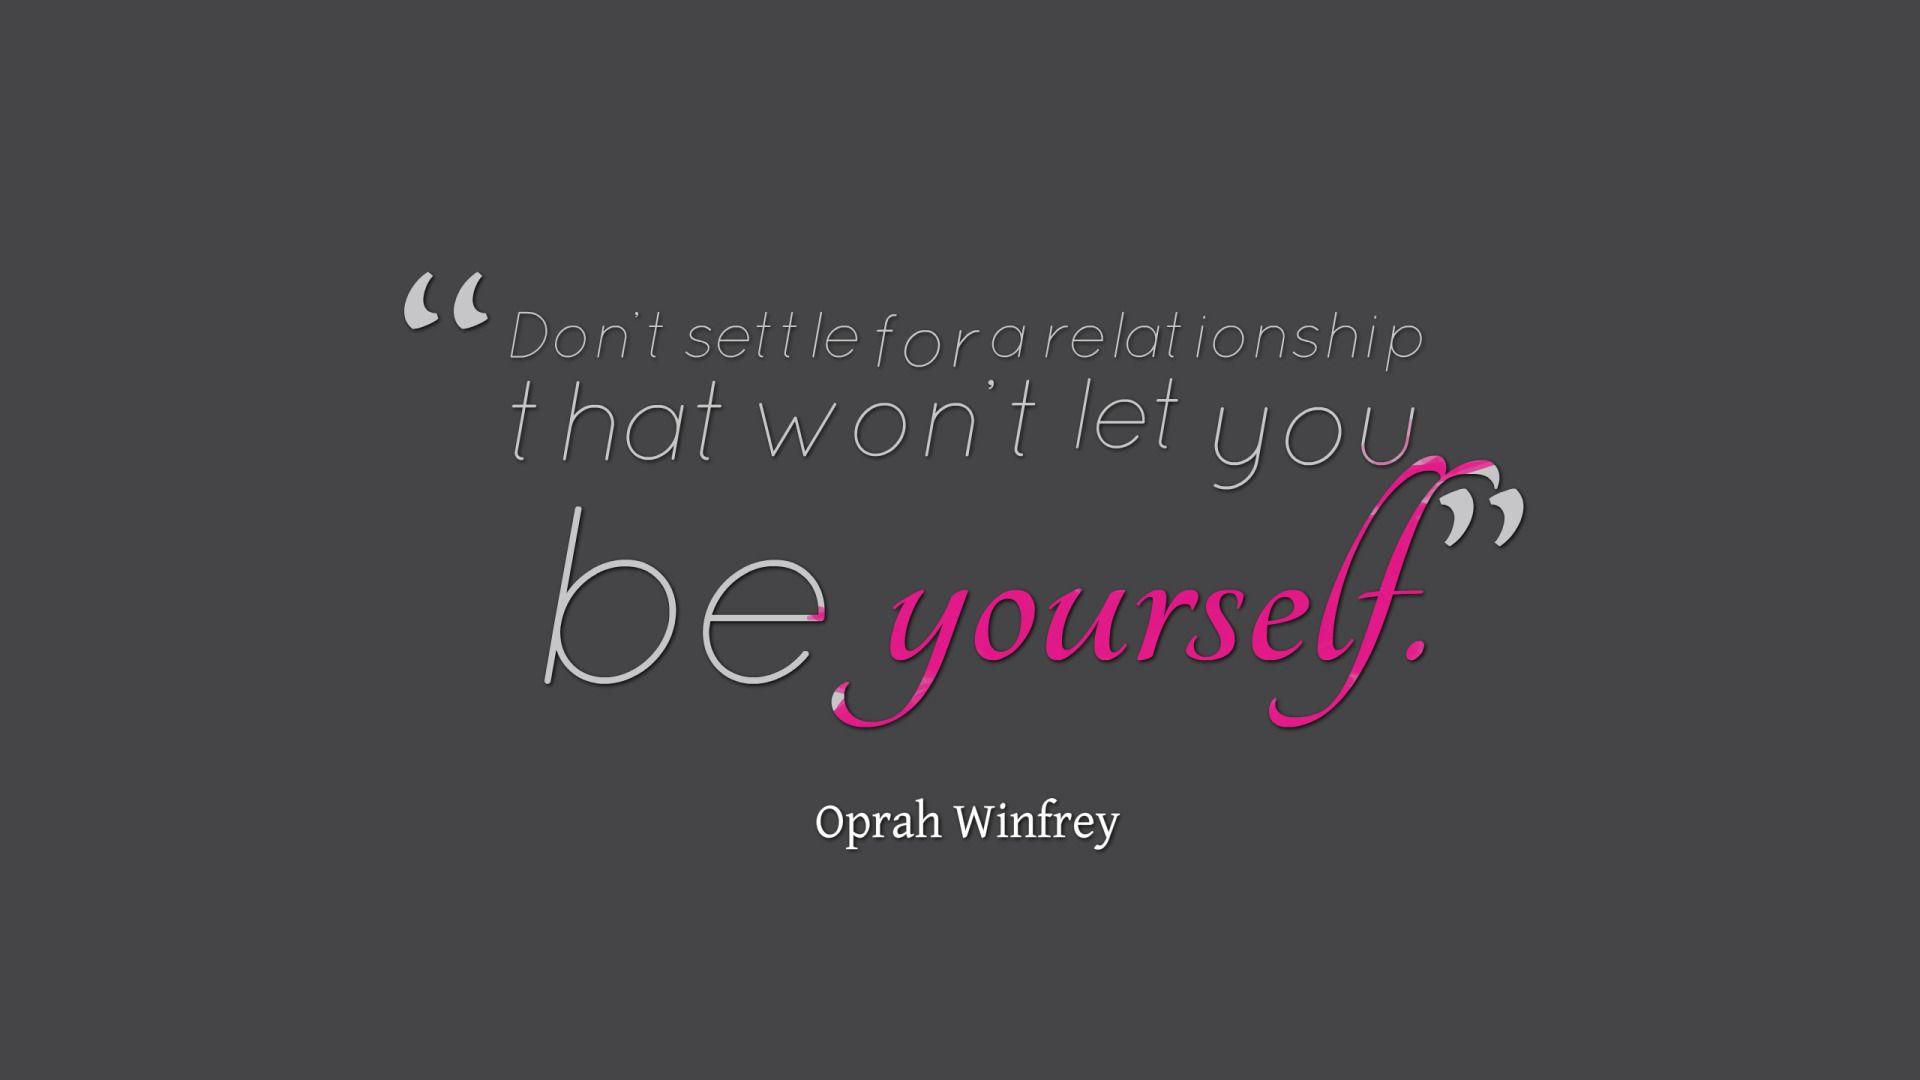 Oprah Winfrey Relationships Quote widescreen wallpaper. Wide